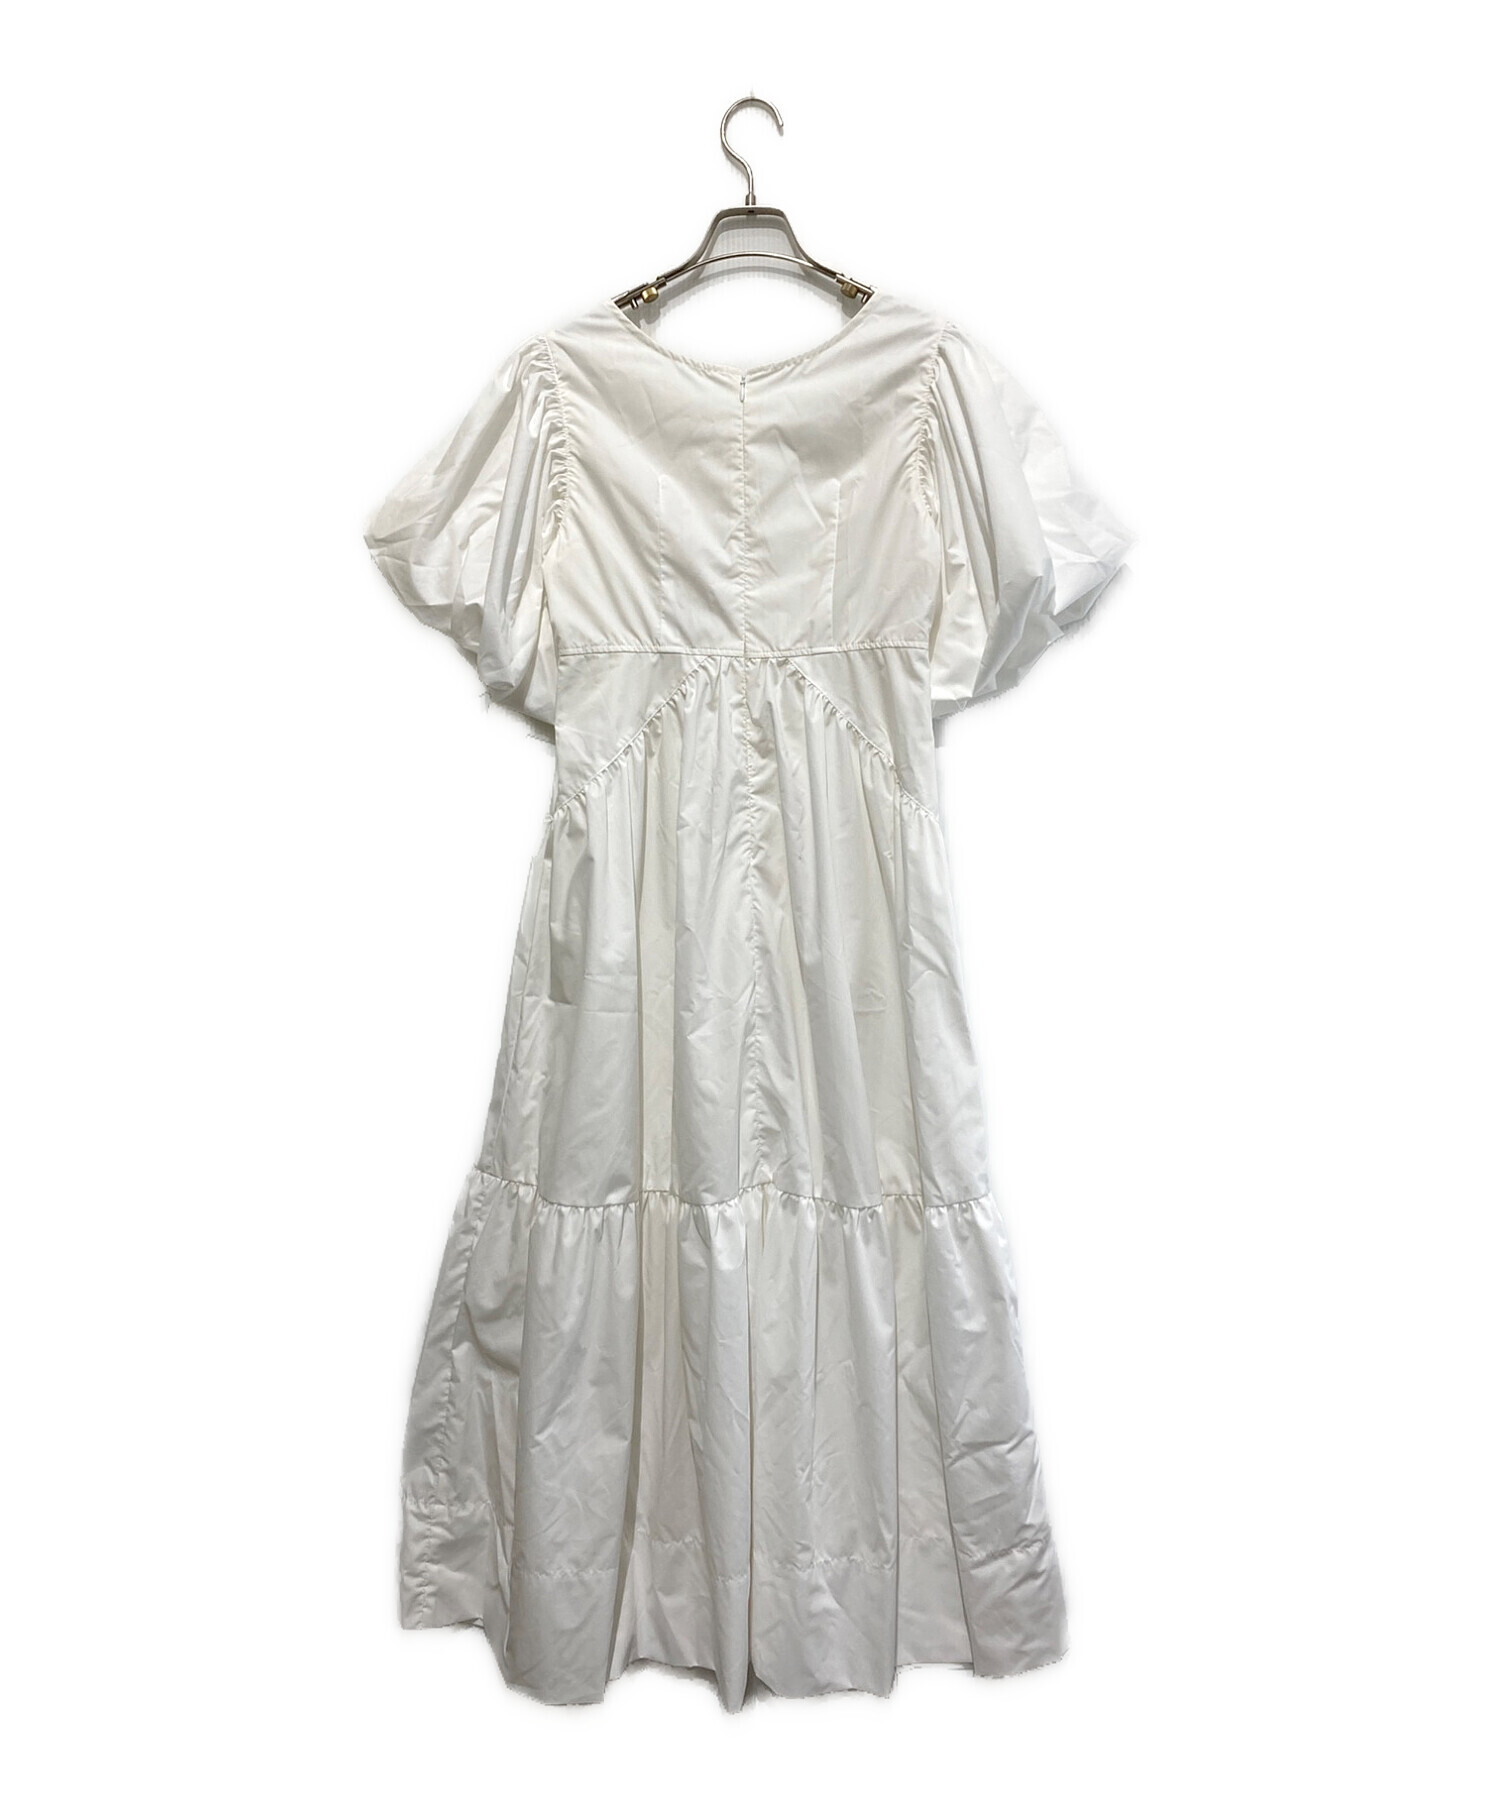 RANDEBOO (ランデブー) Lingerie puff dress ホワイト サイズ:SIZE FREE